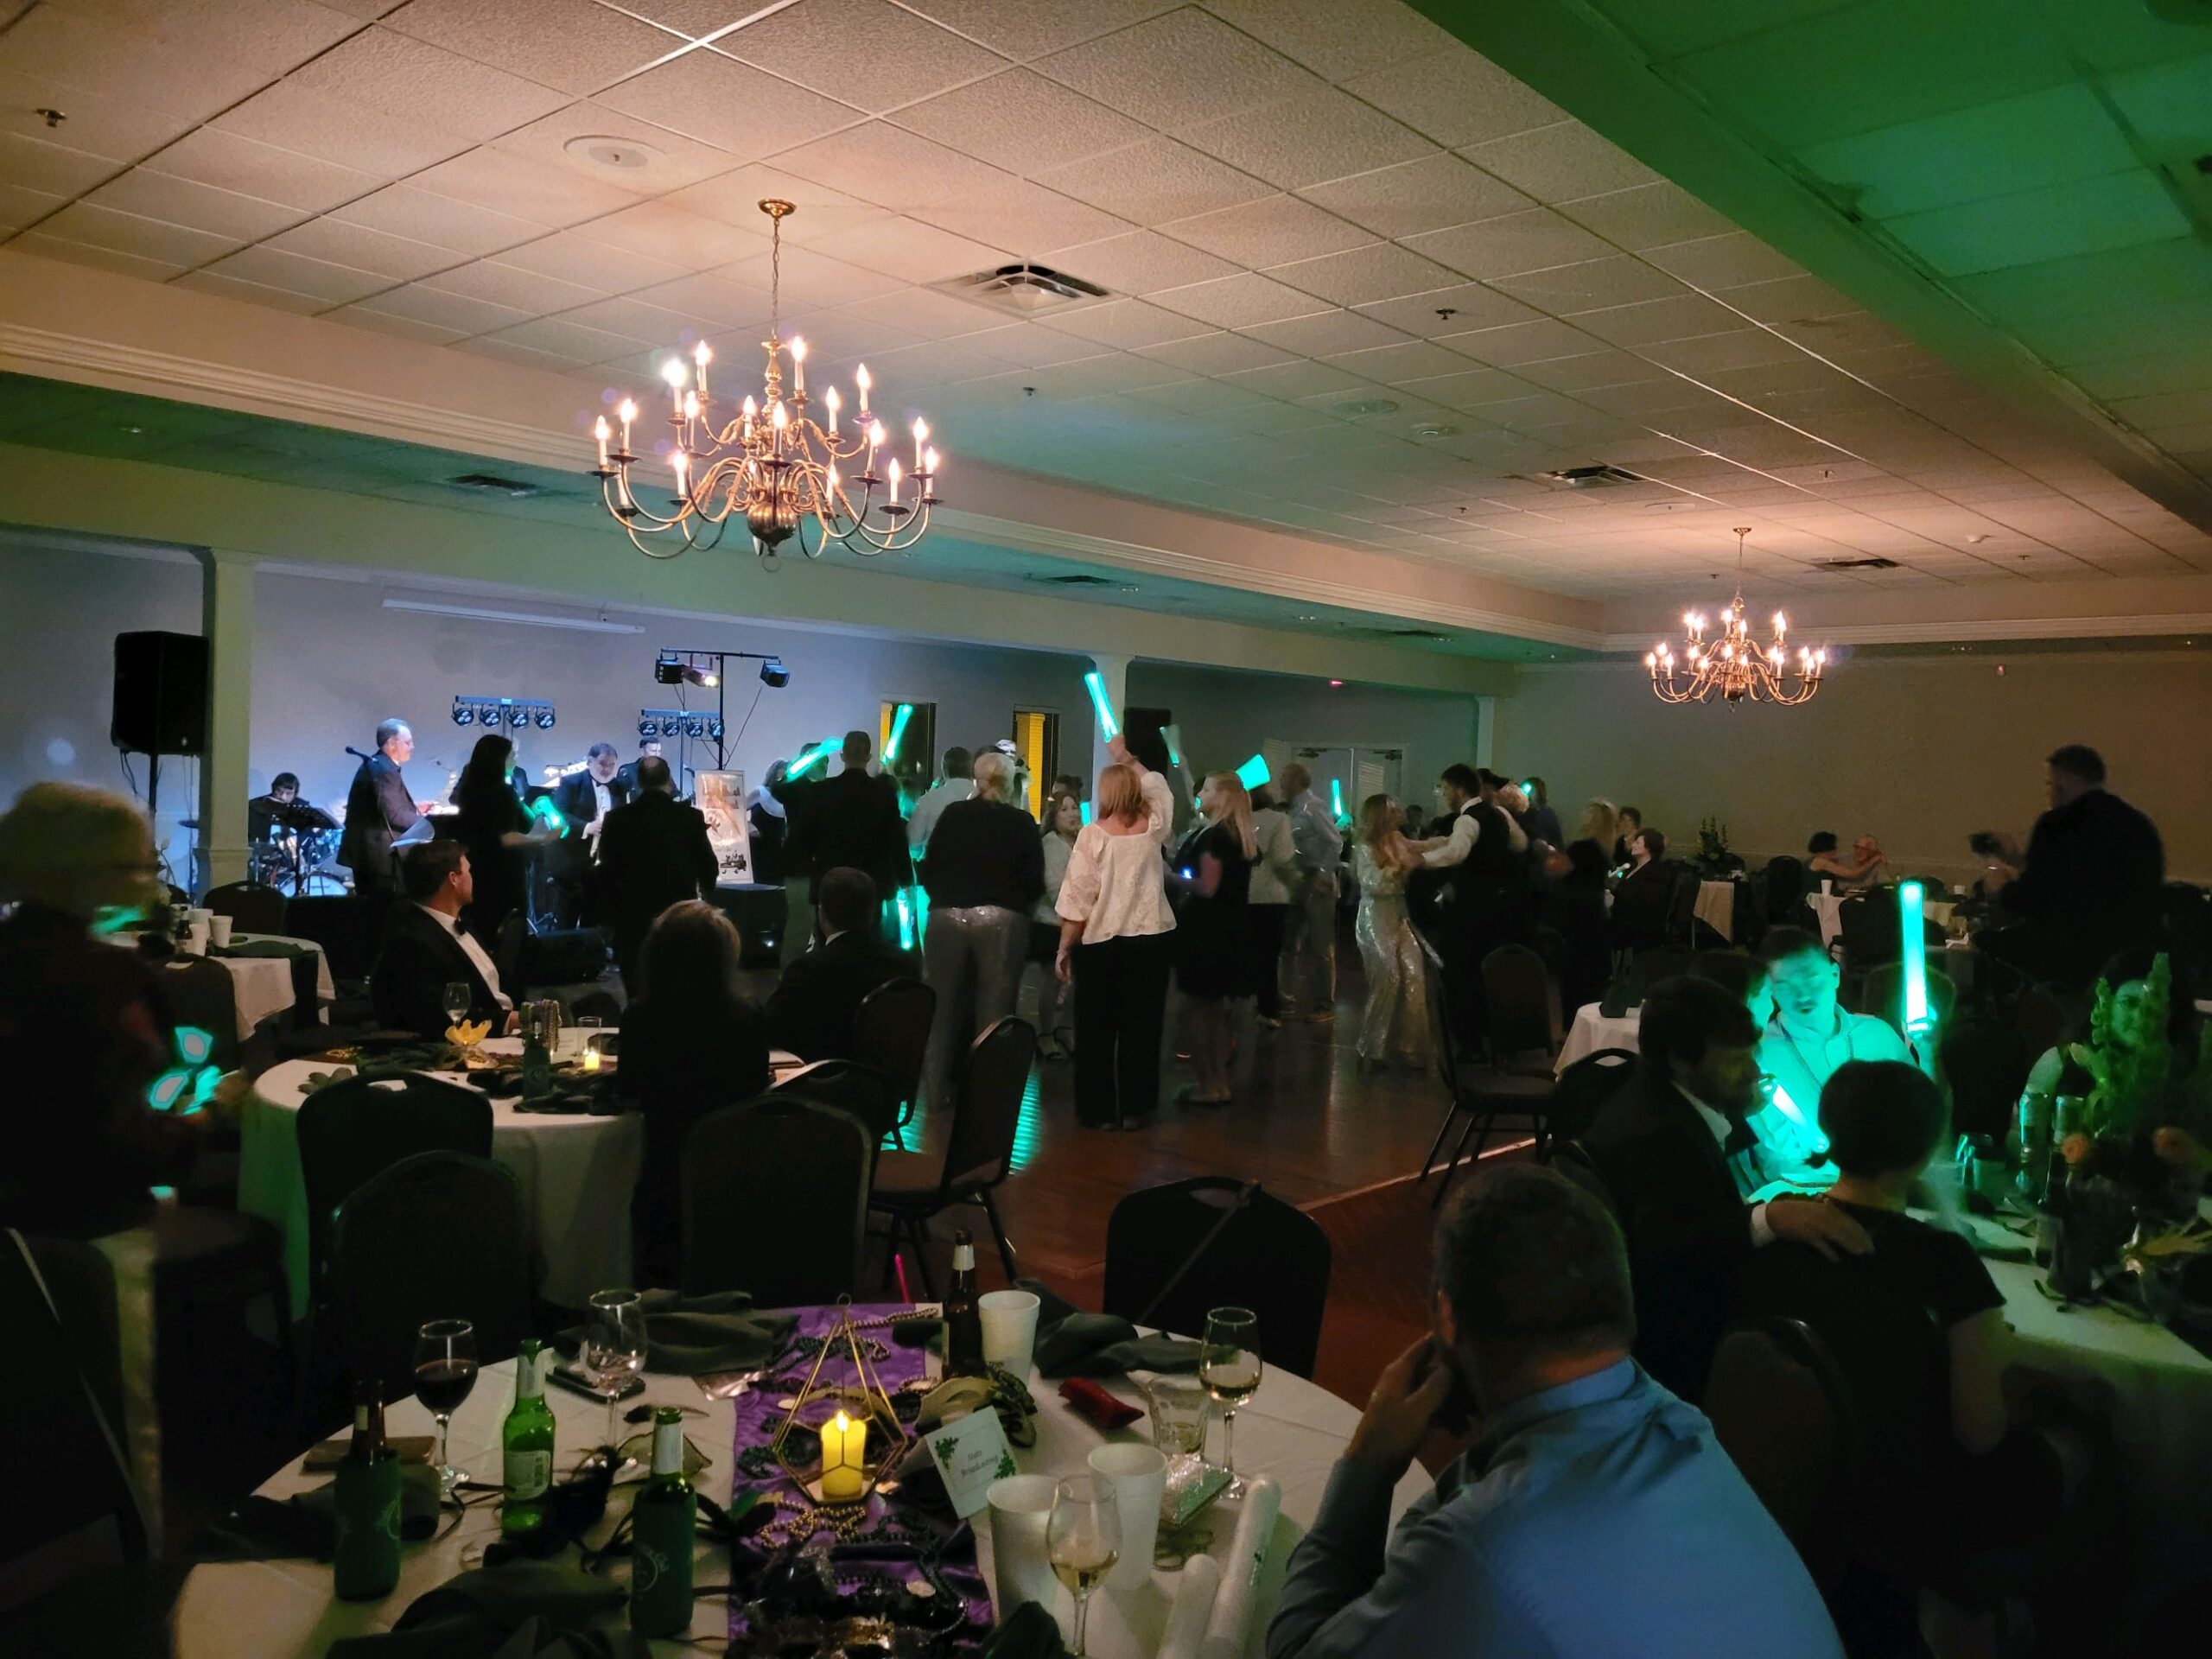 People enjoying live music on the dance floor at St. Patrick's Gala.